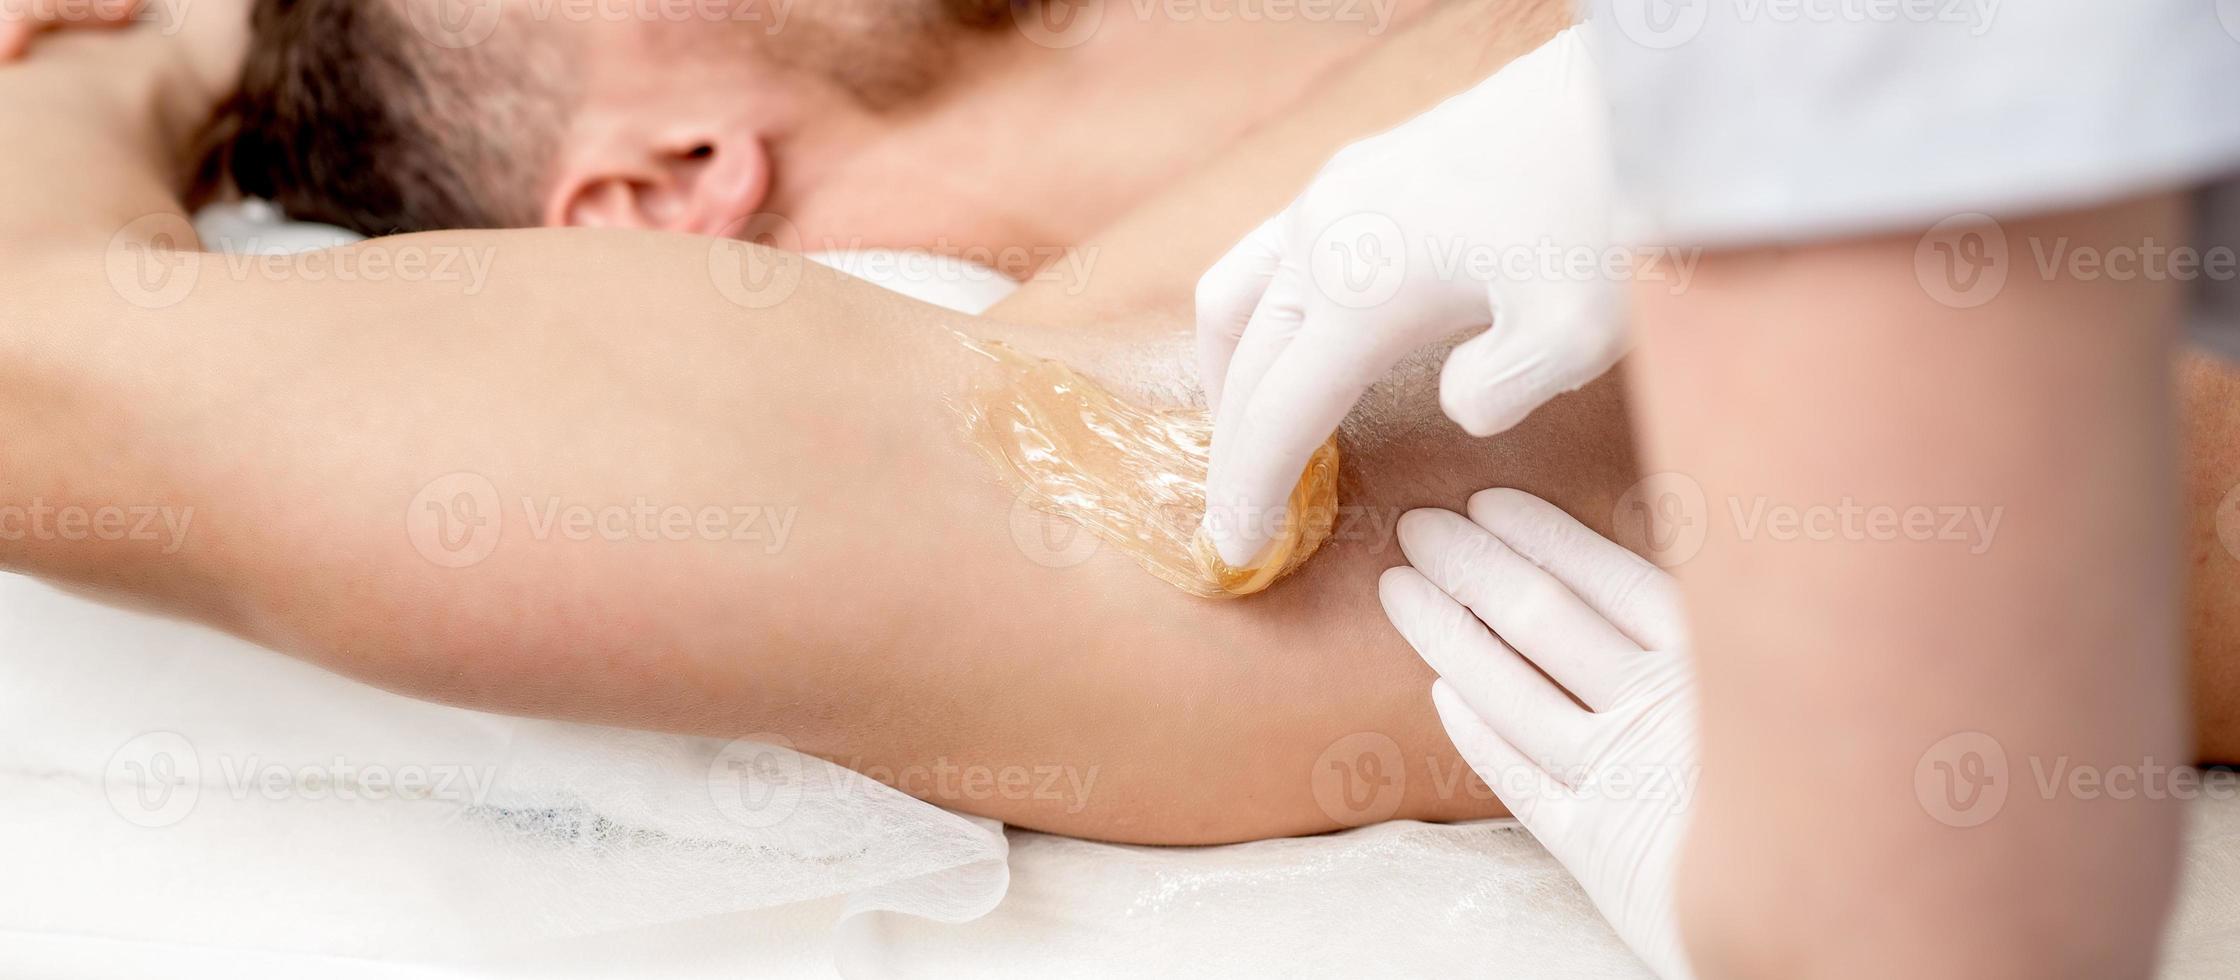 Cosmetologist applying wax paste on male armpit photo